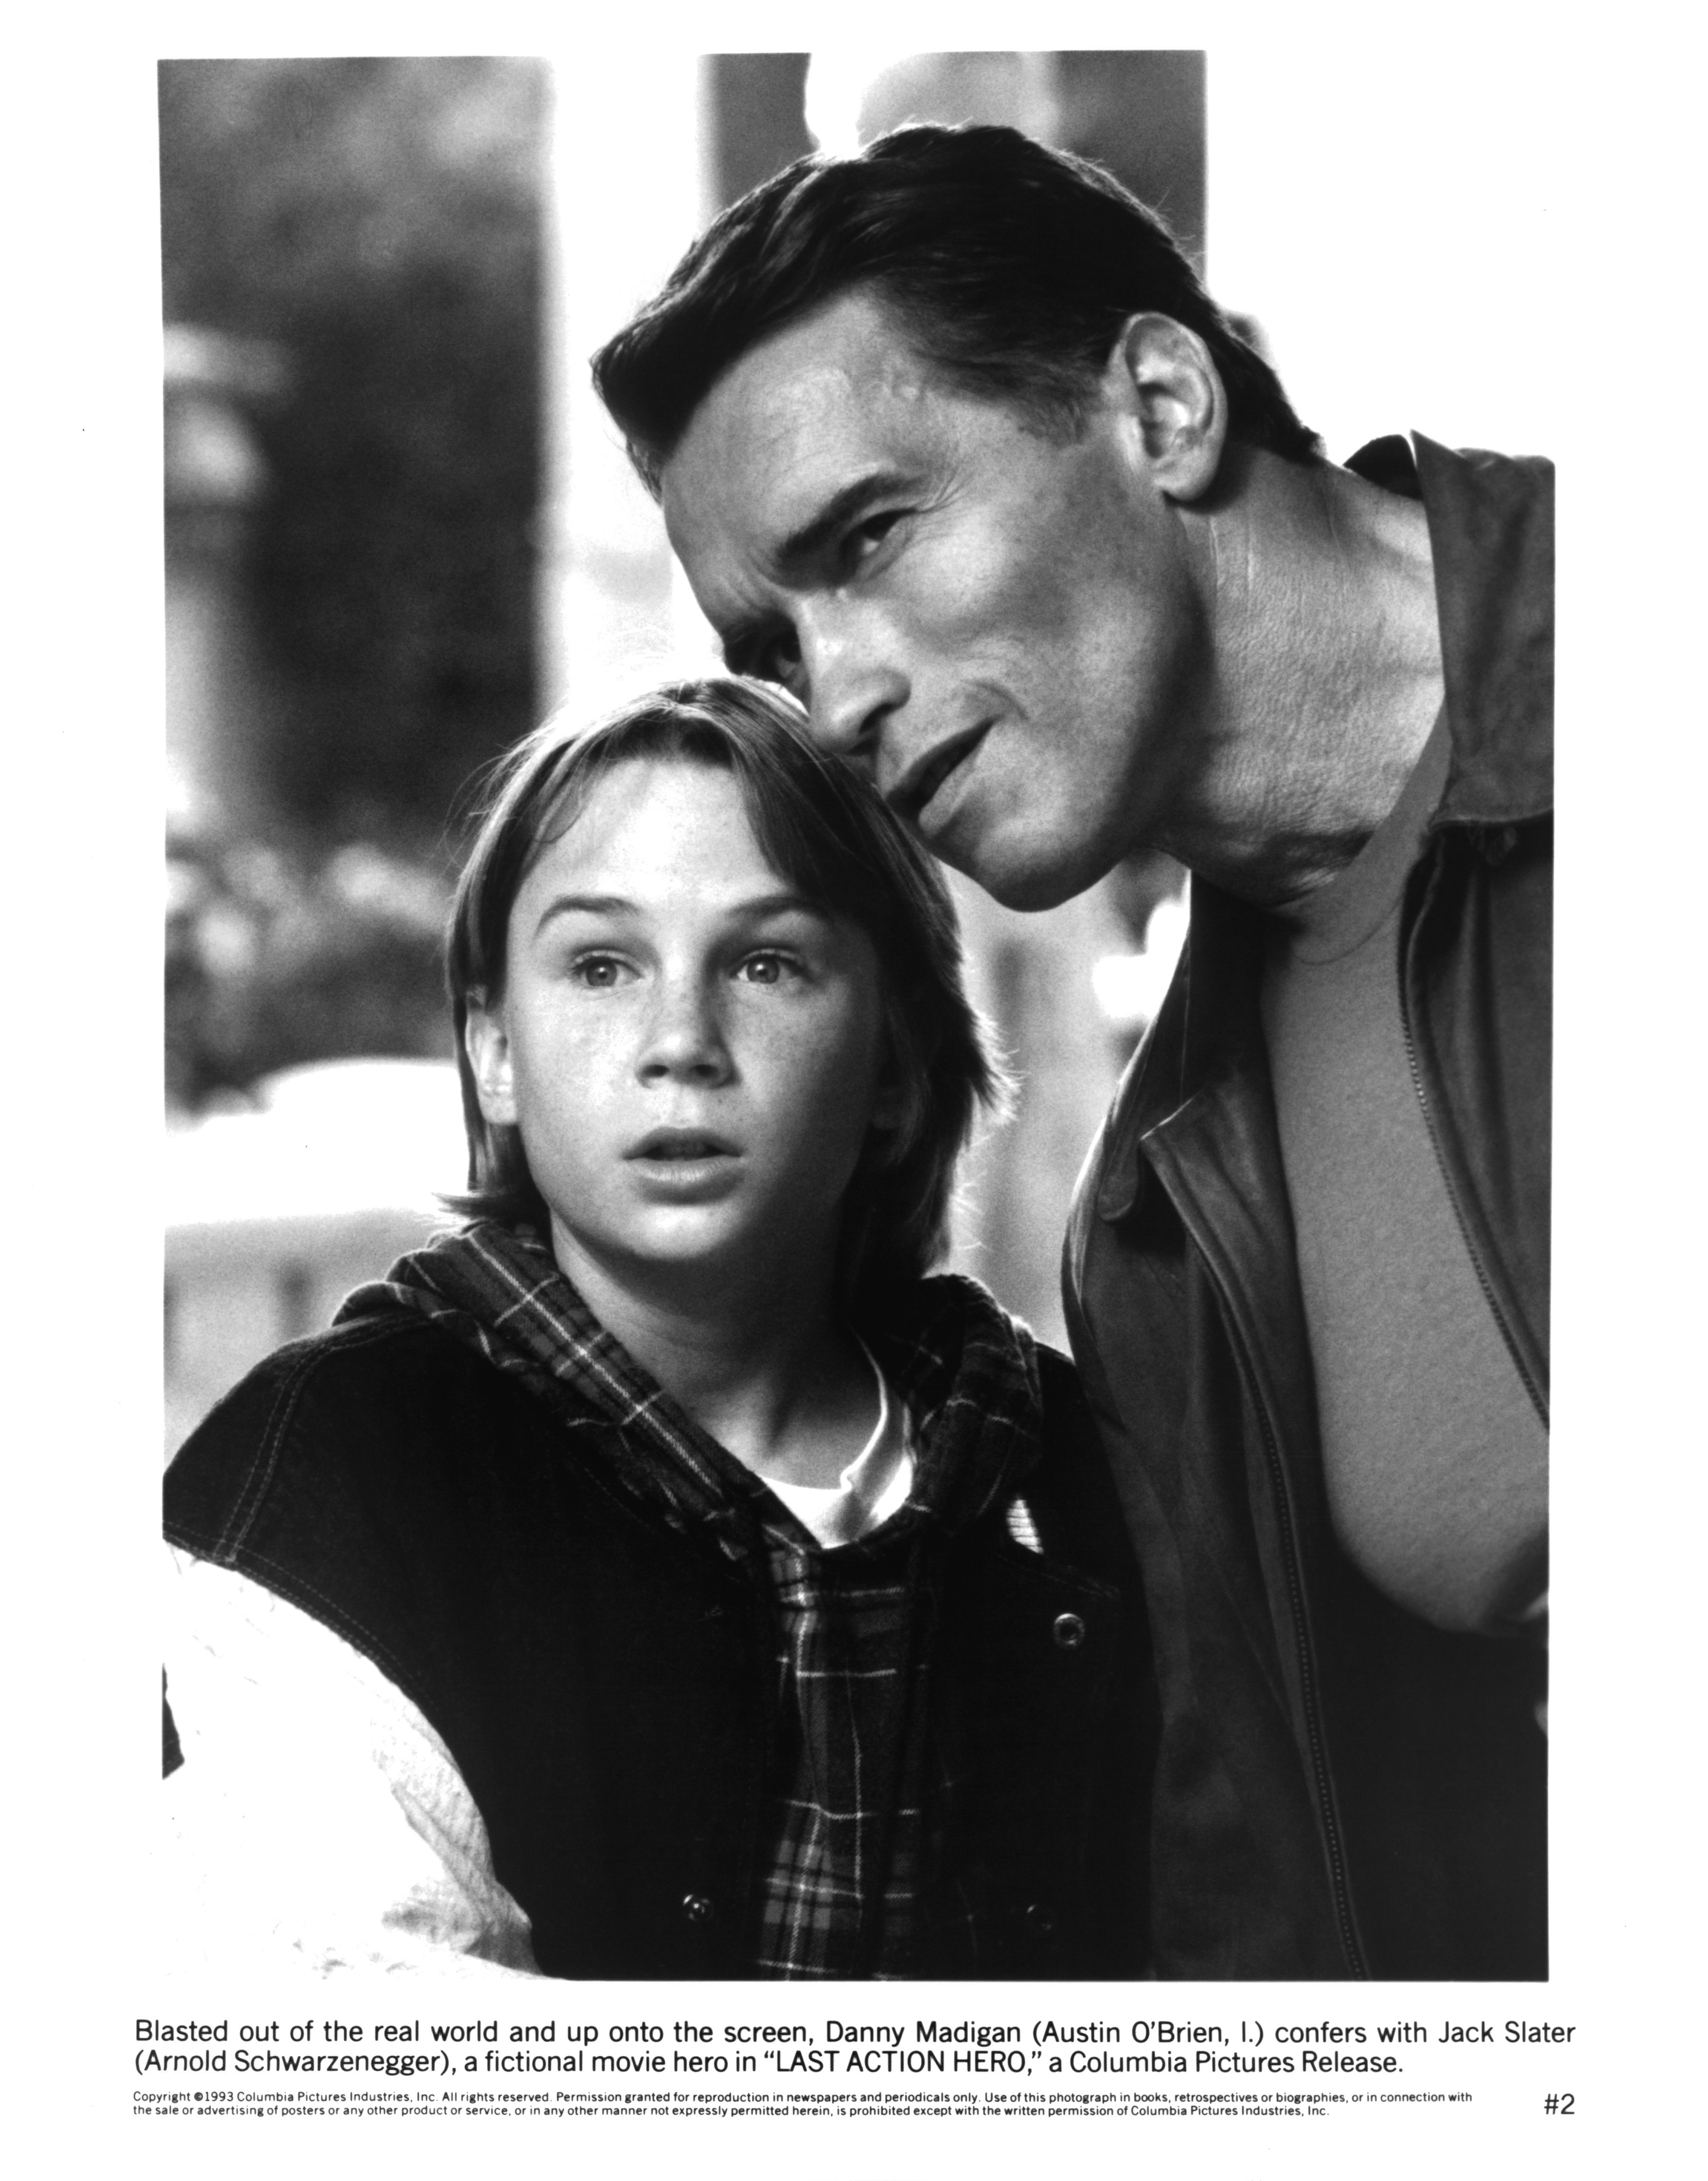 Still of Arnold Schwarzenegger and Austin O'Brien in Last Action Hero (1993)